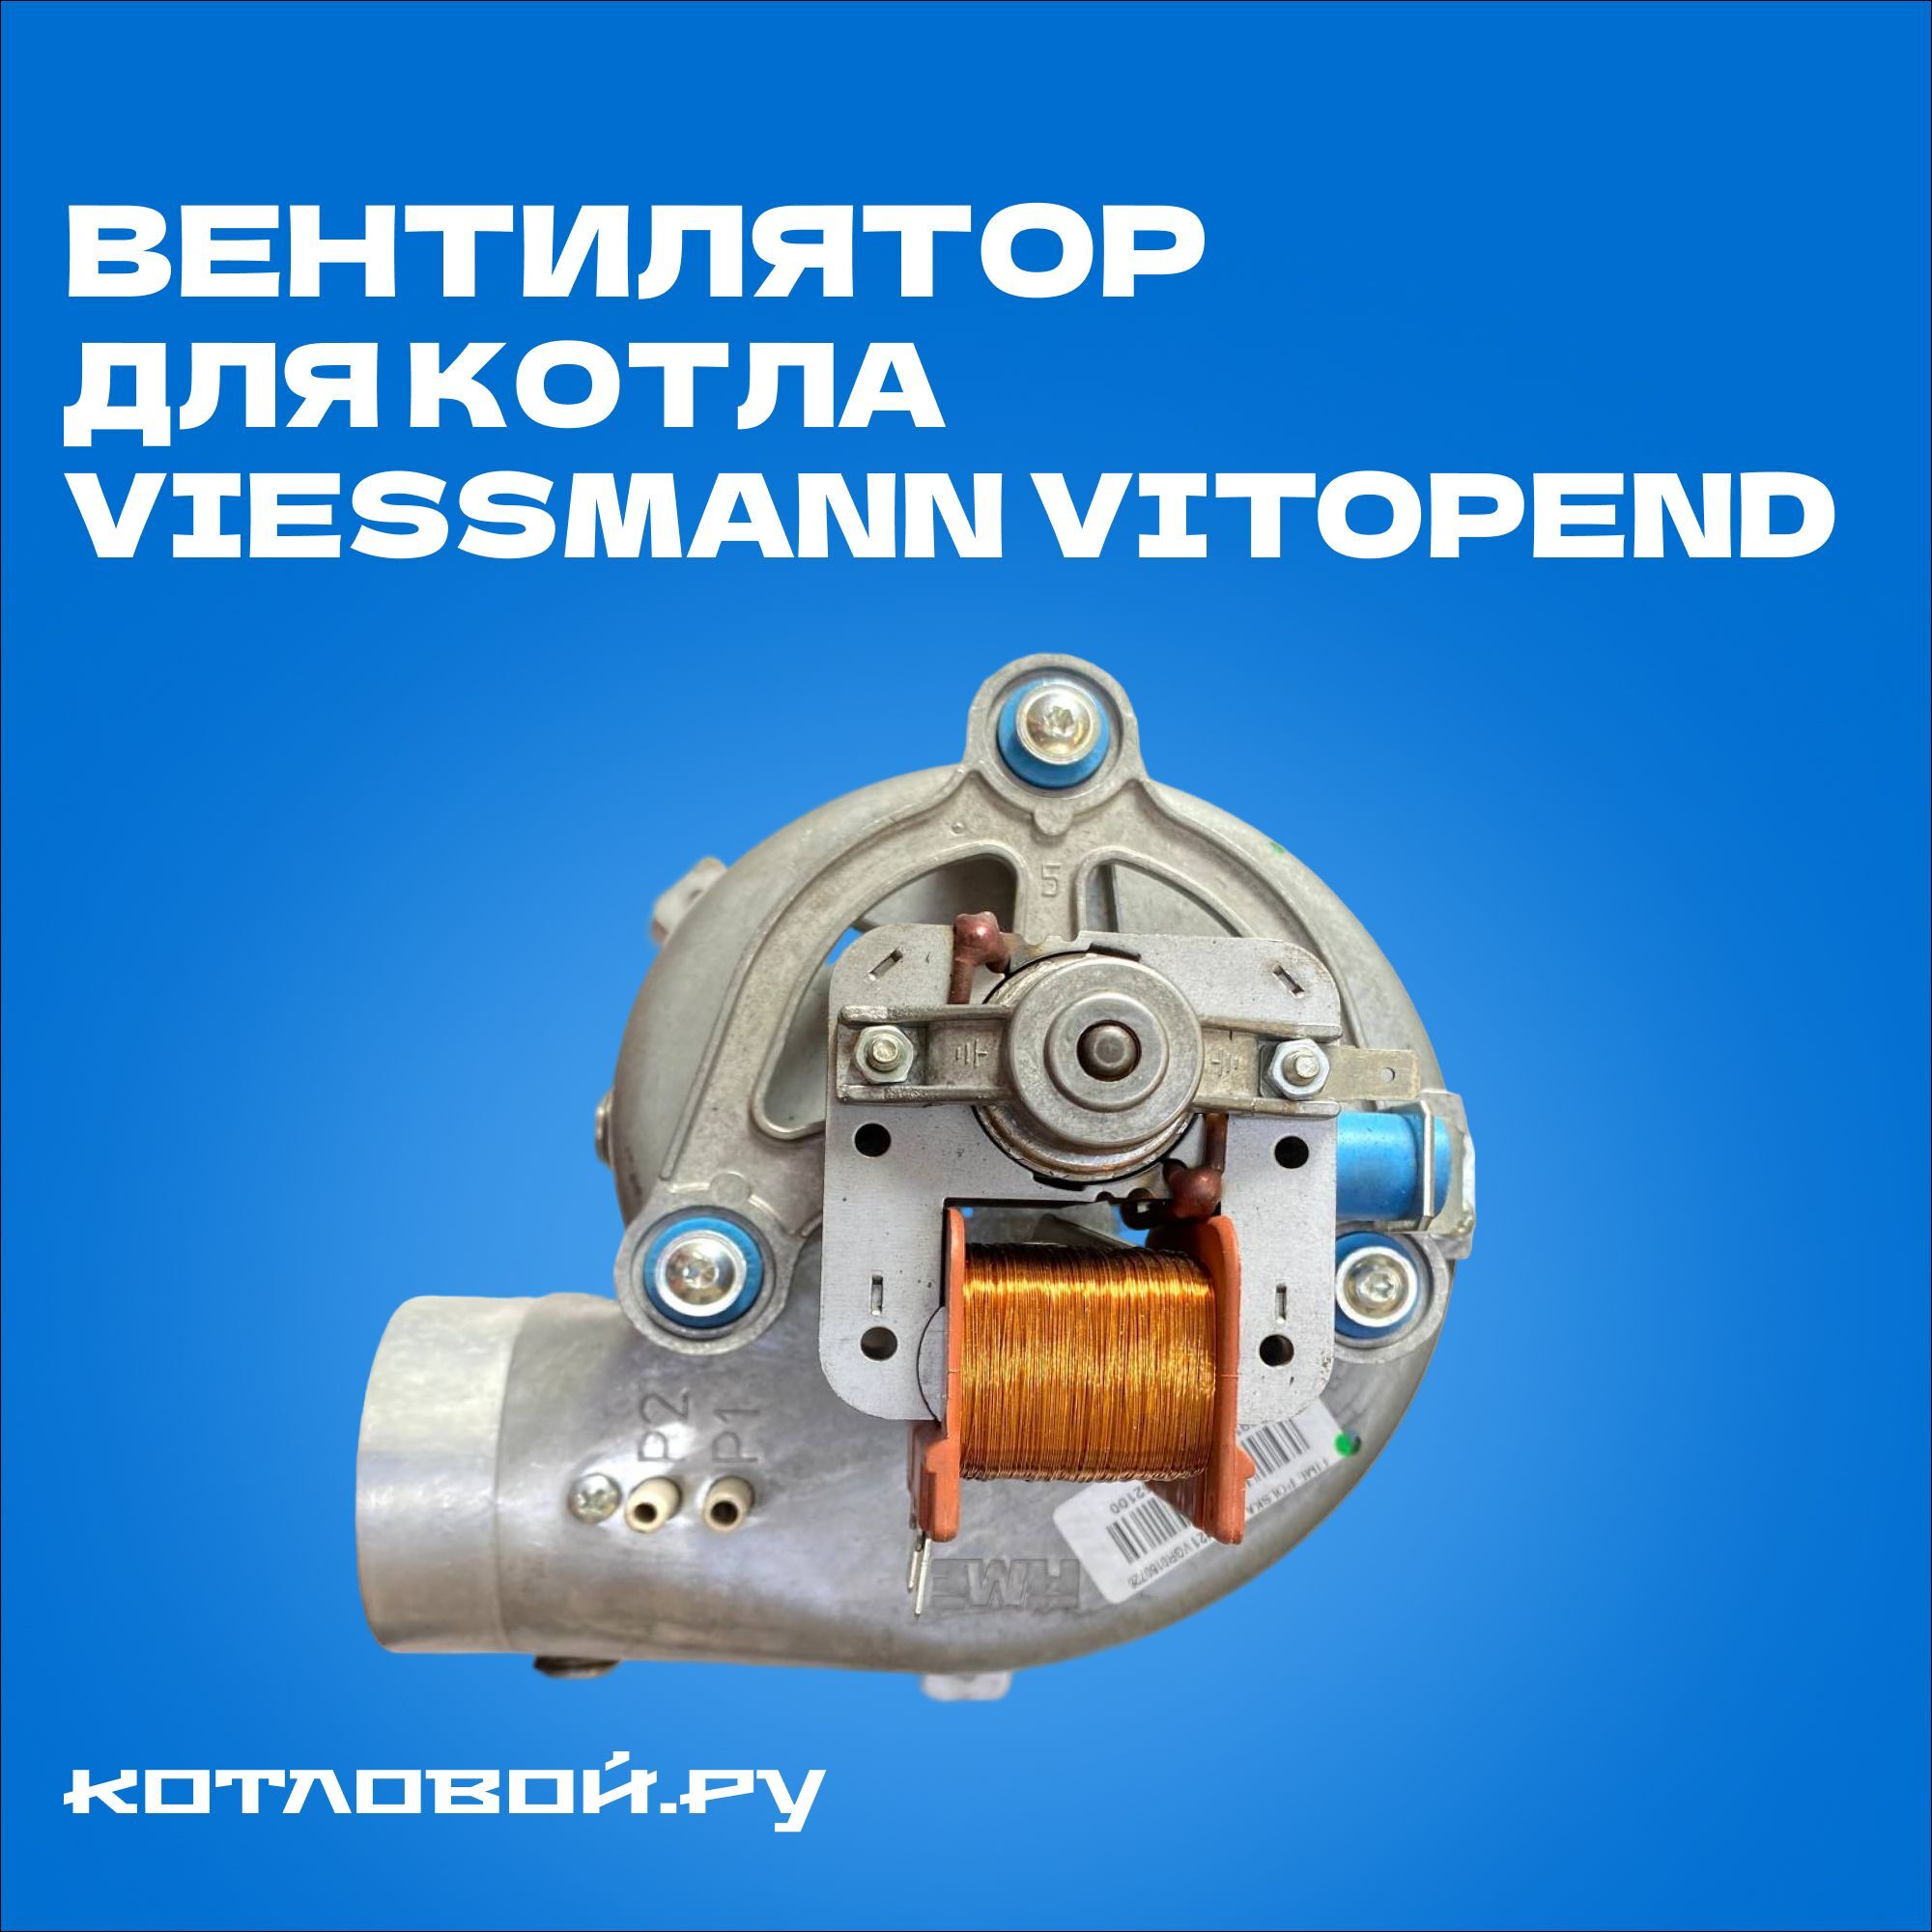 Вентилятор дымоудаления VIESSMANN 42W, 24 кВт (Vitopend)